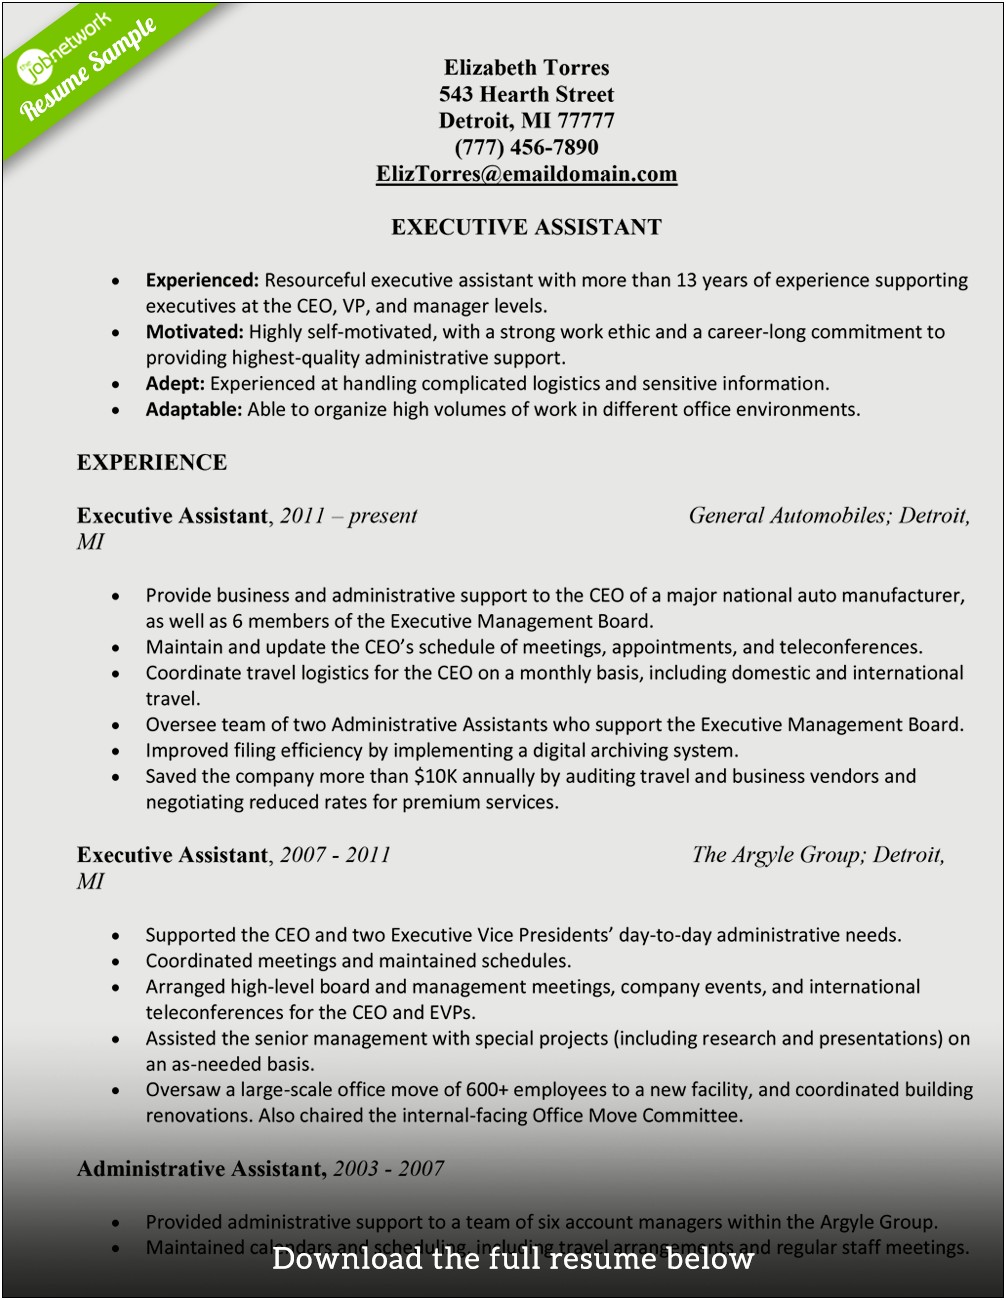 Executive Administrative Assistant Job Description For Resume